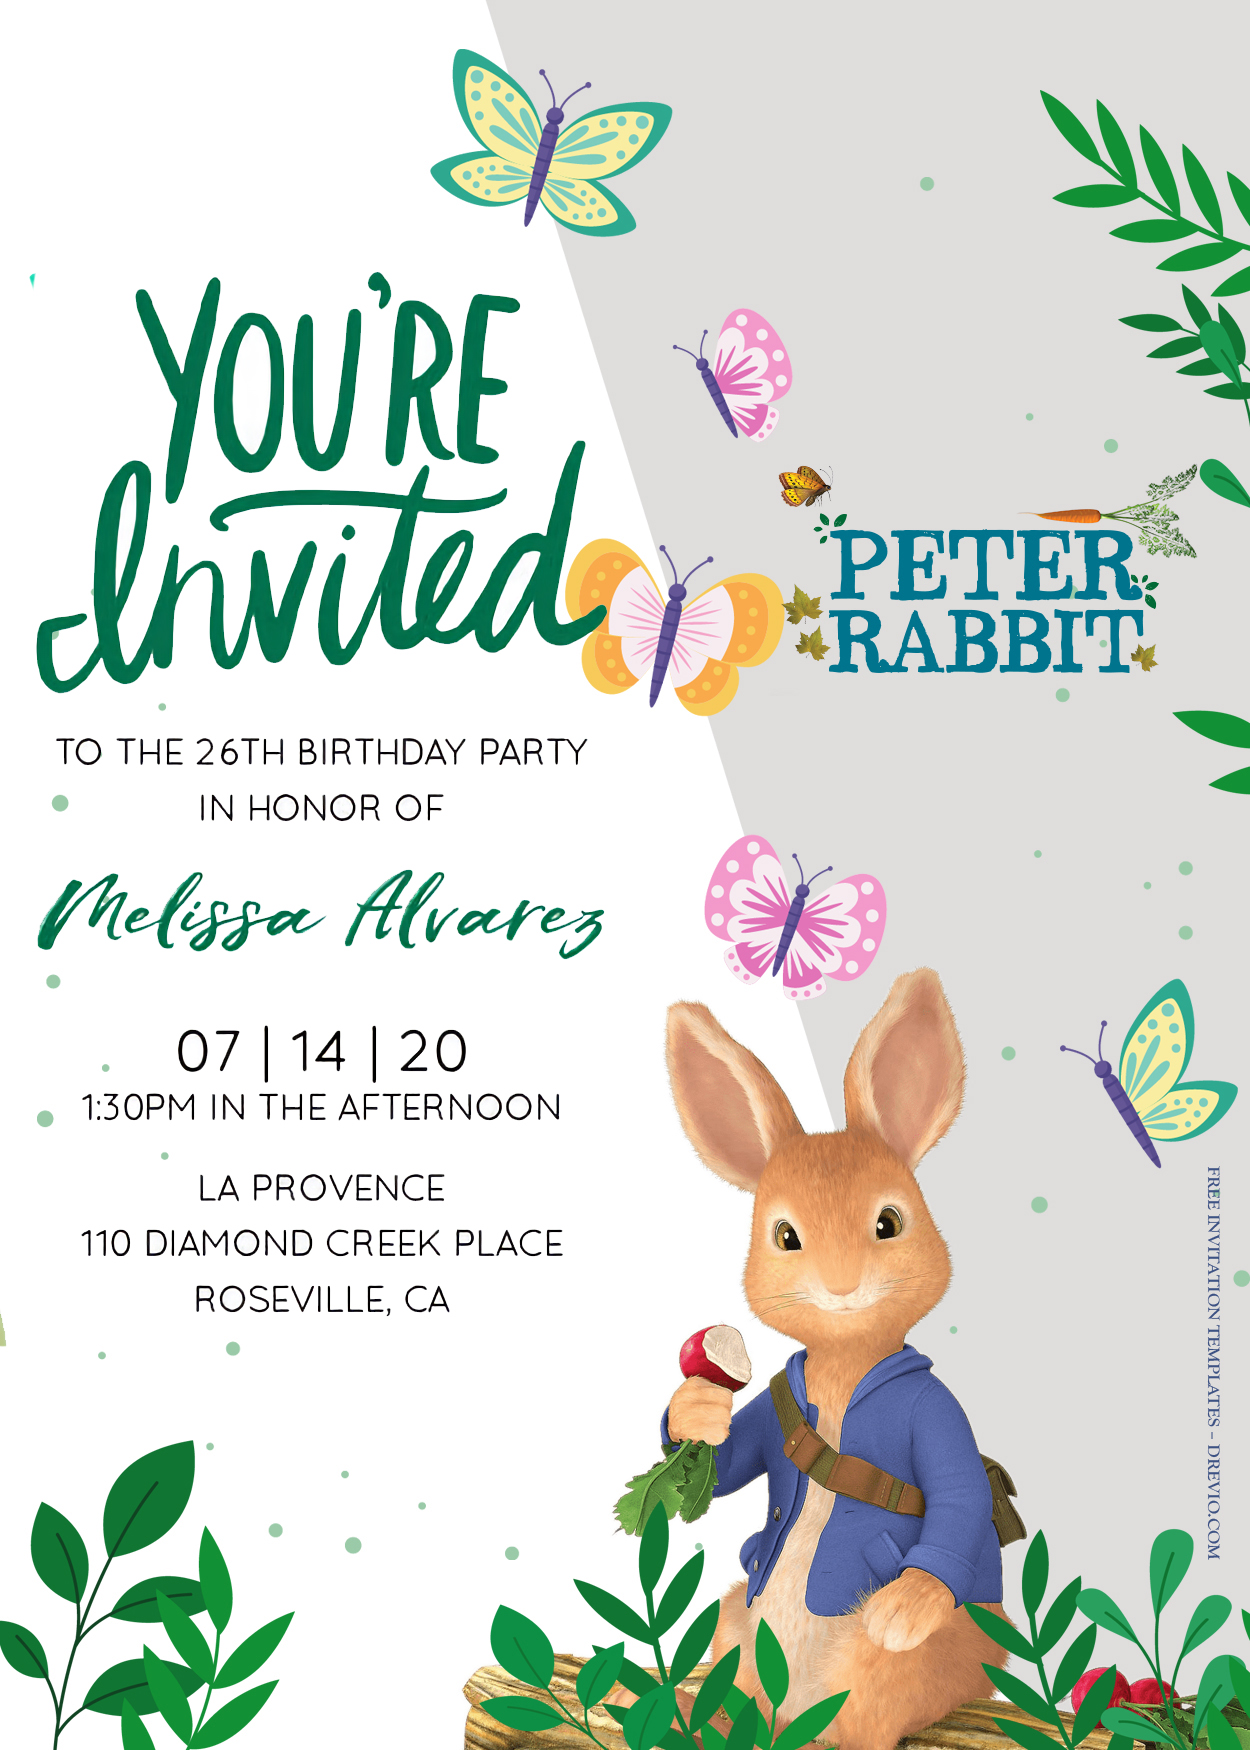 Peter Rabbit Birthday Party Ideas, Photo 2 of 9